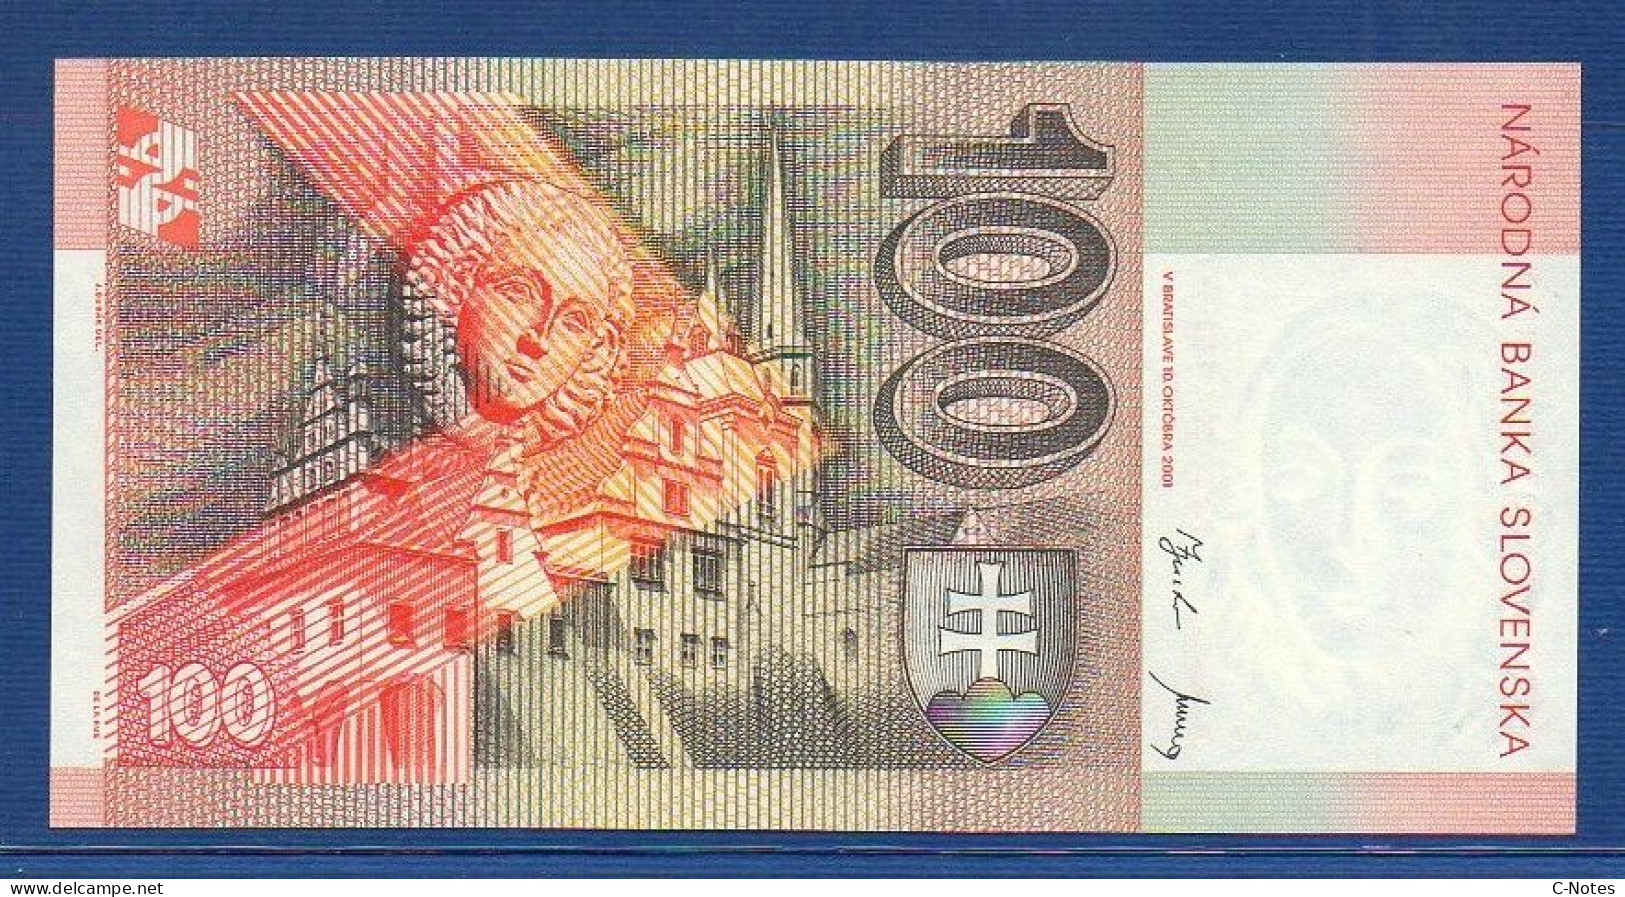 SLOVAKIA - P.25d – 100 Slovenských Korún 2001 UNC, S/n U15195882 - Slovakia